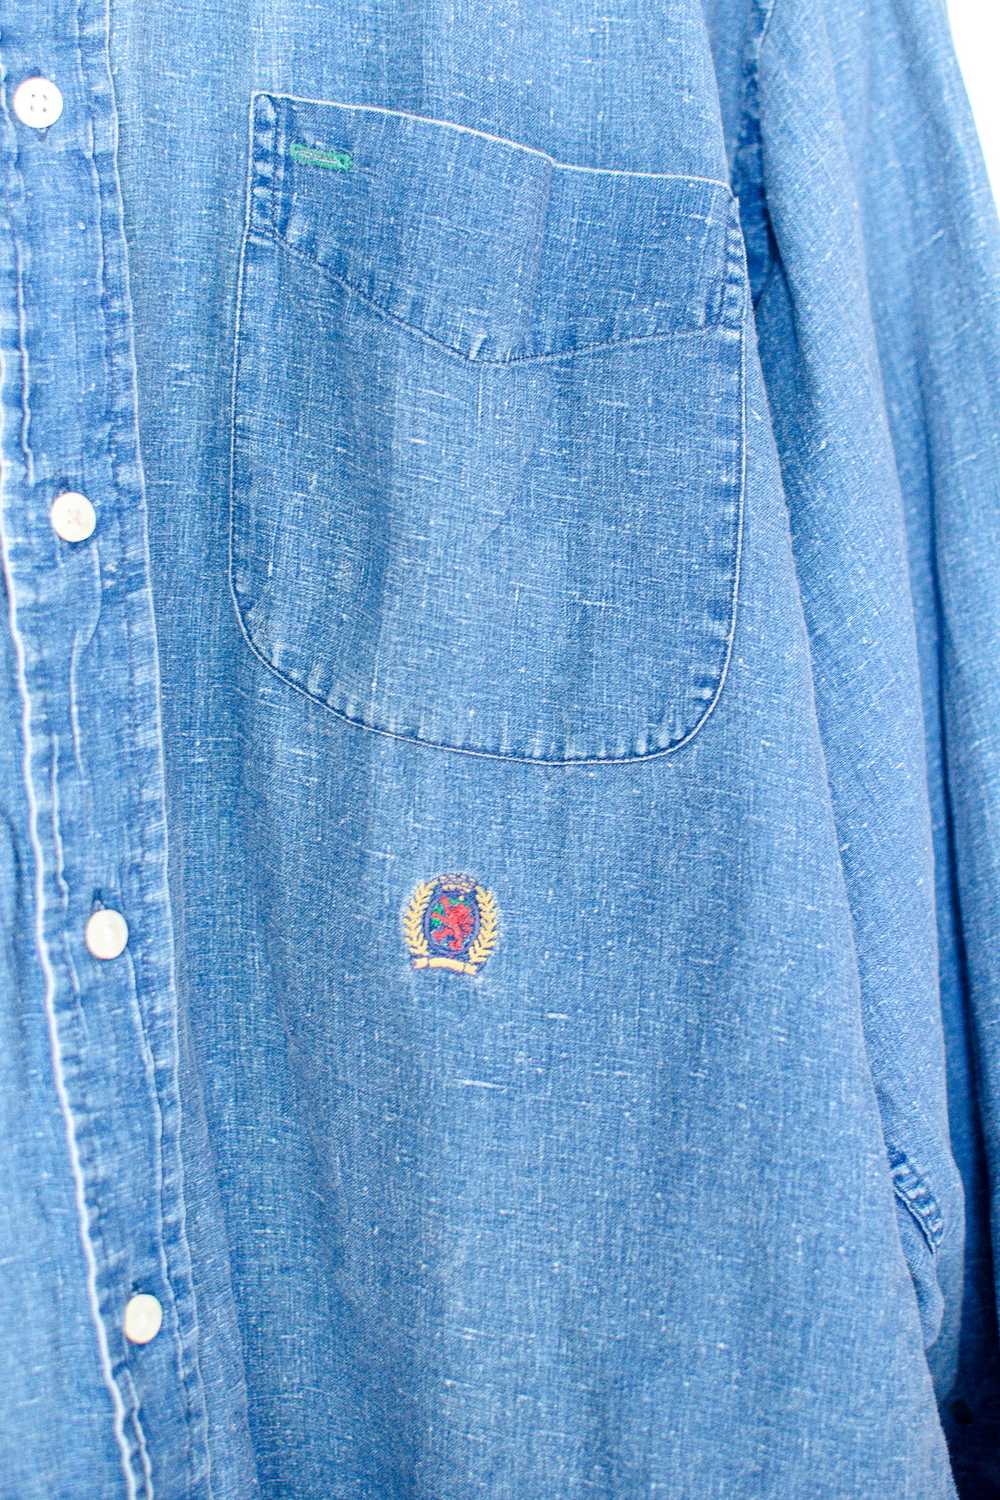 1990s-2000s Denim Button Up Top / Large - XLarge - image 5